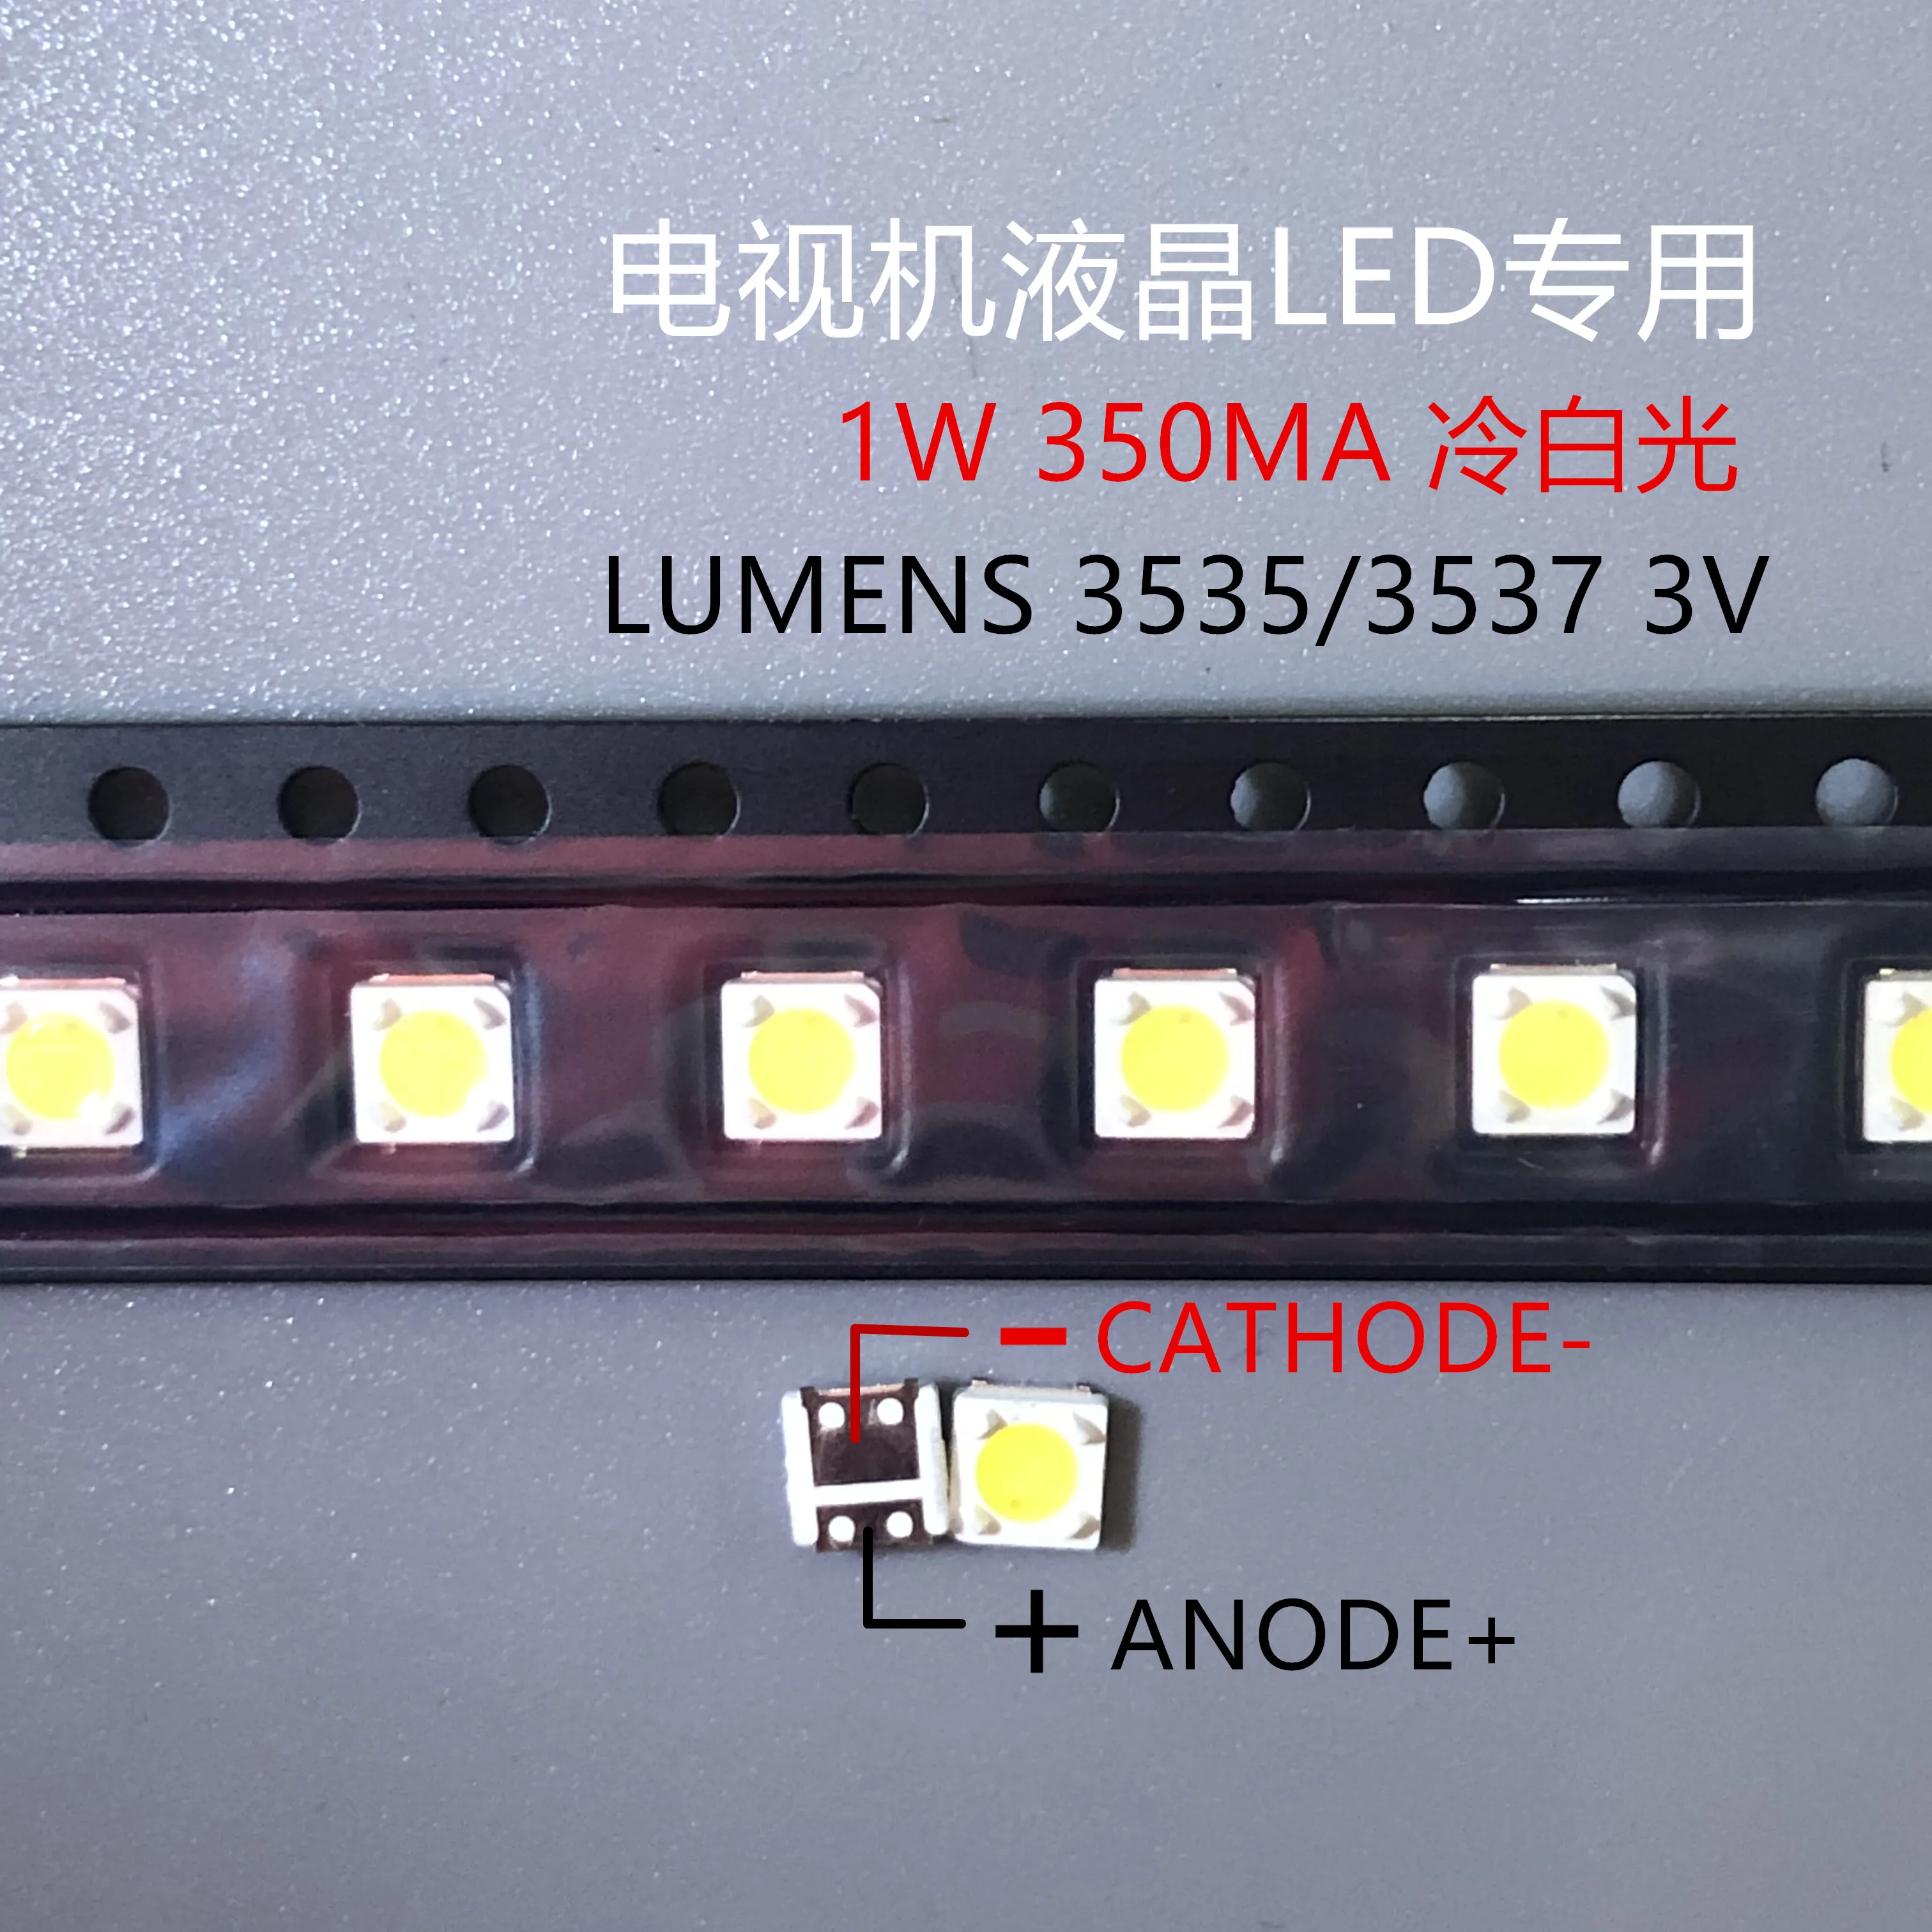 1000pcs LUMENI LED-uri SMD 3535 3537 1W 3V alb Rece lumina de Fundal LCD pentru TV A129CECEBP19C 4JIAO